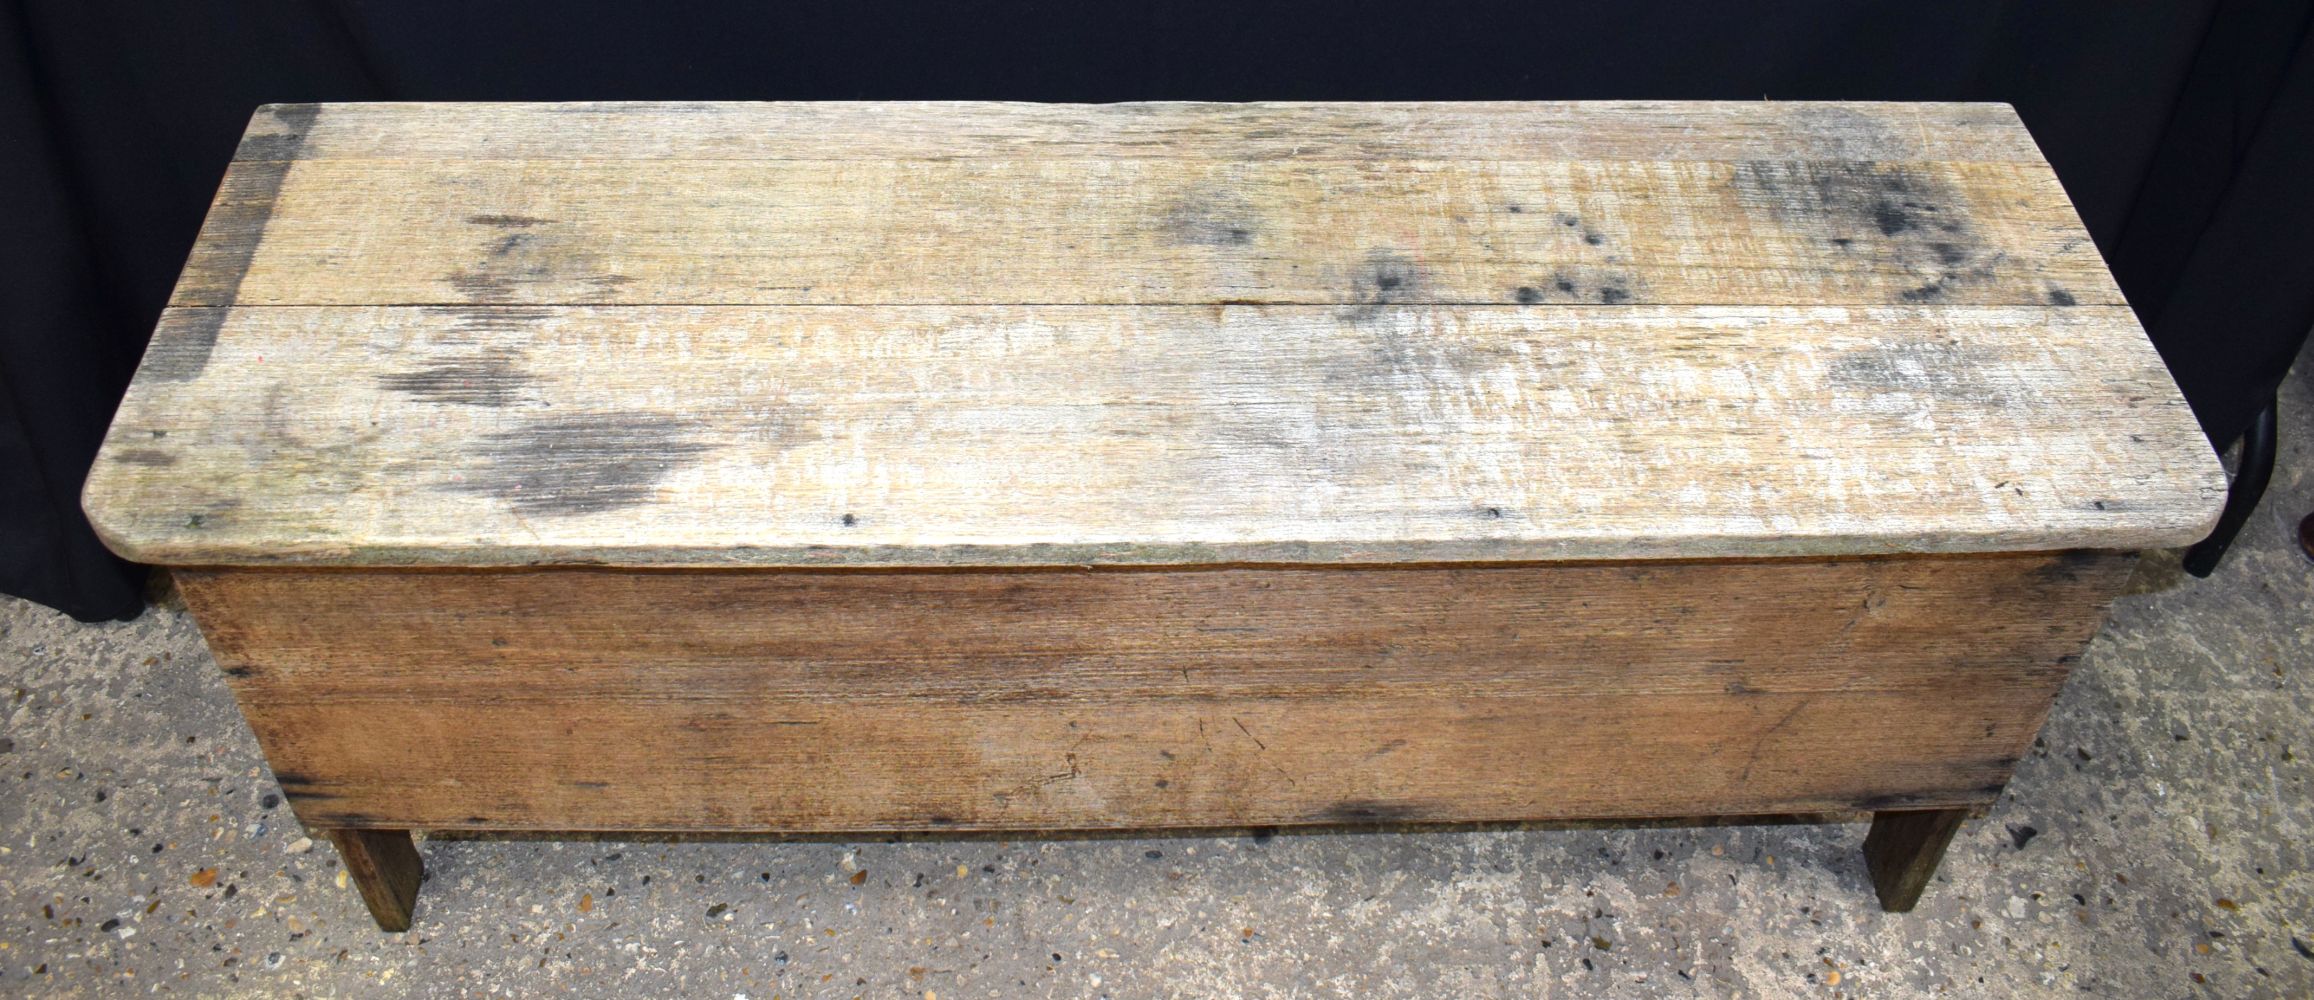 A rustic Oak chest 51 x 117 x 37 cm. - Image 6 of 8